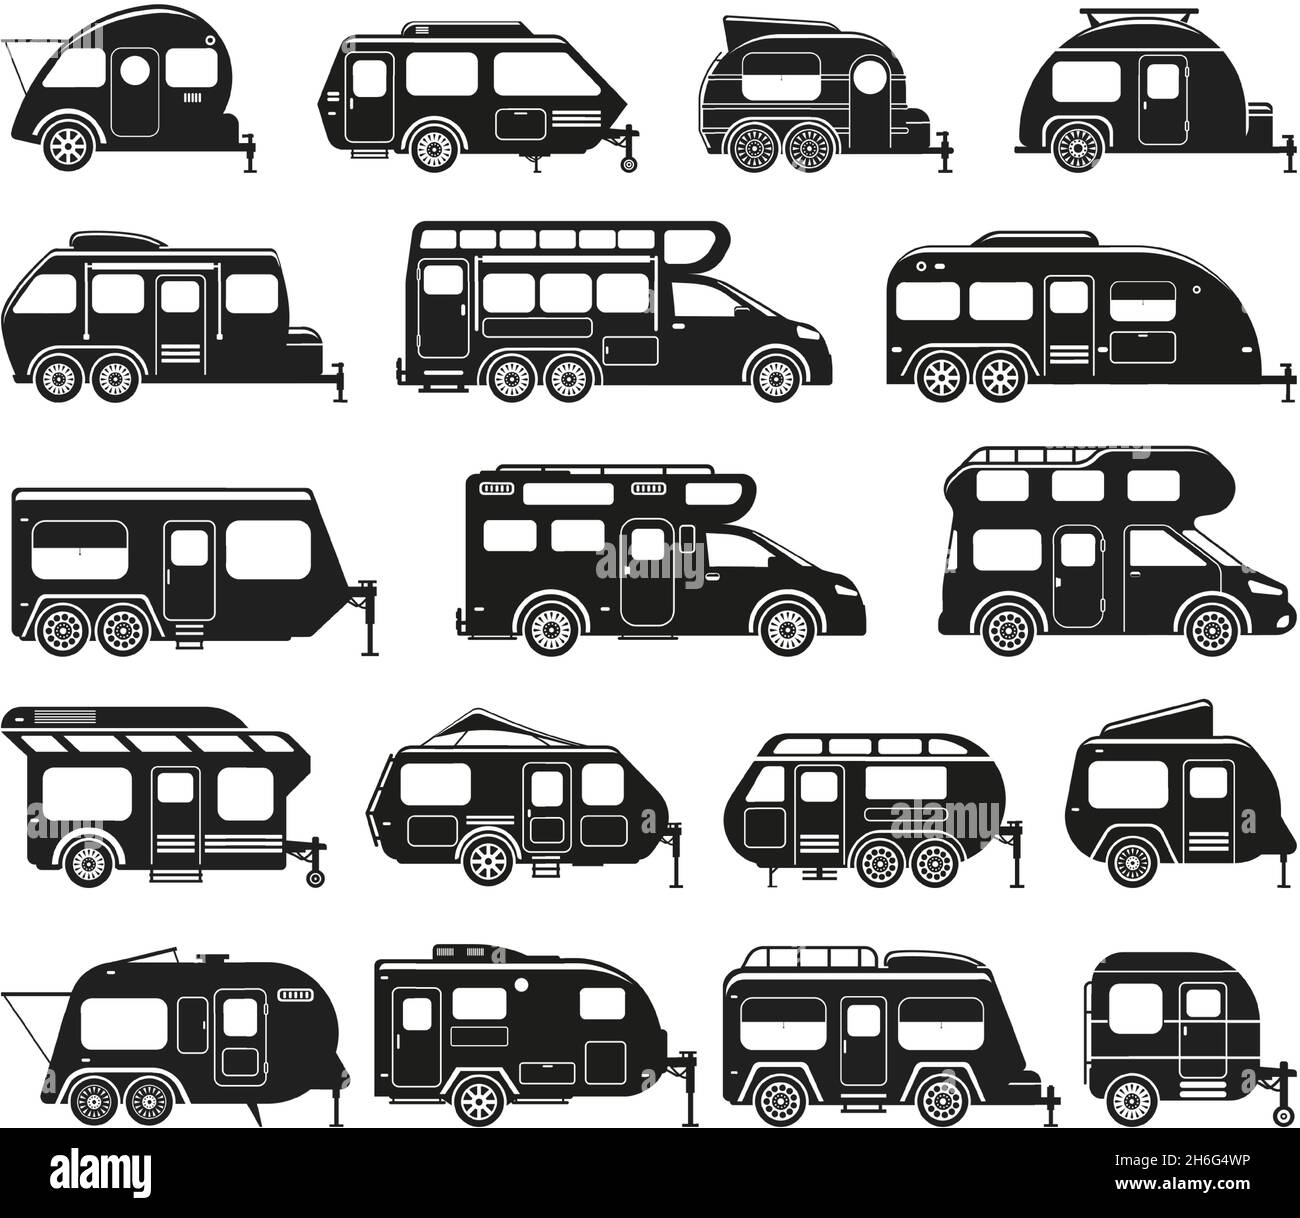 Camper vans, caravan rv cars and camping trailers silhouettes. Camping motor home, road trip car wagon vector flat illustration set. Recreational Stock Vector